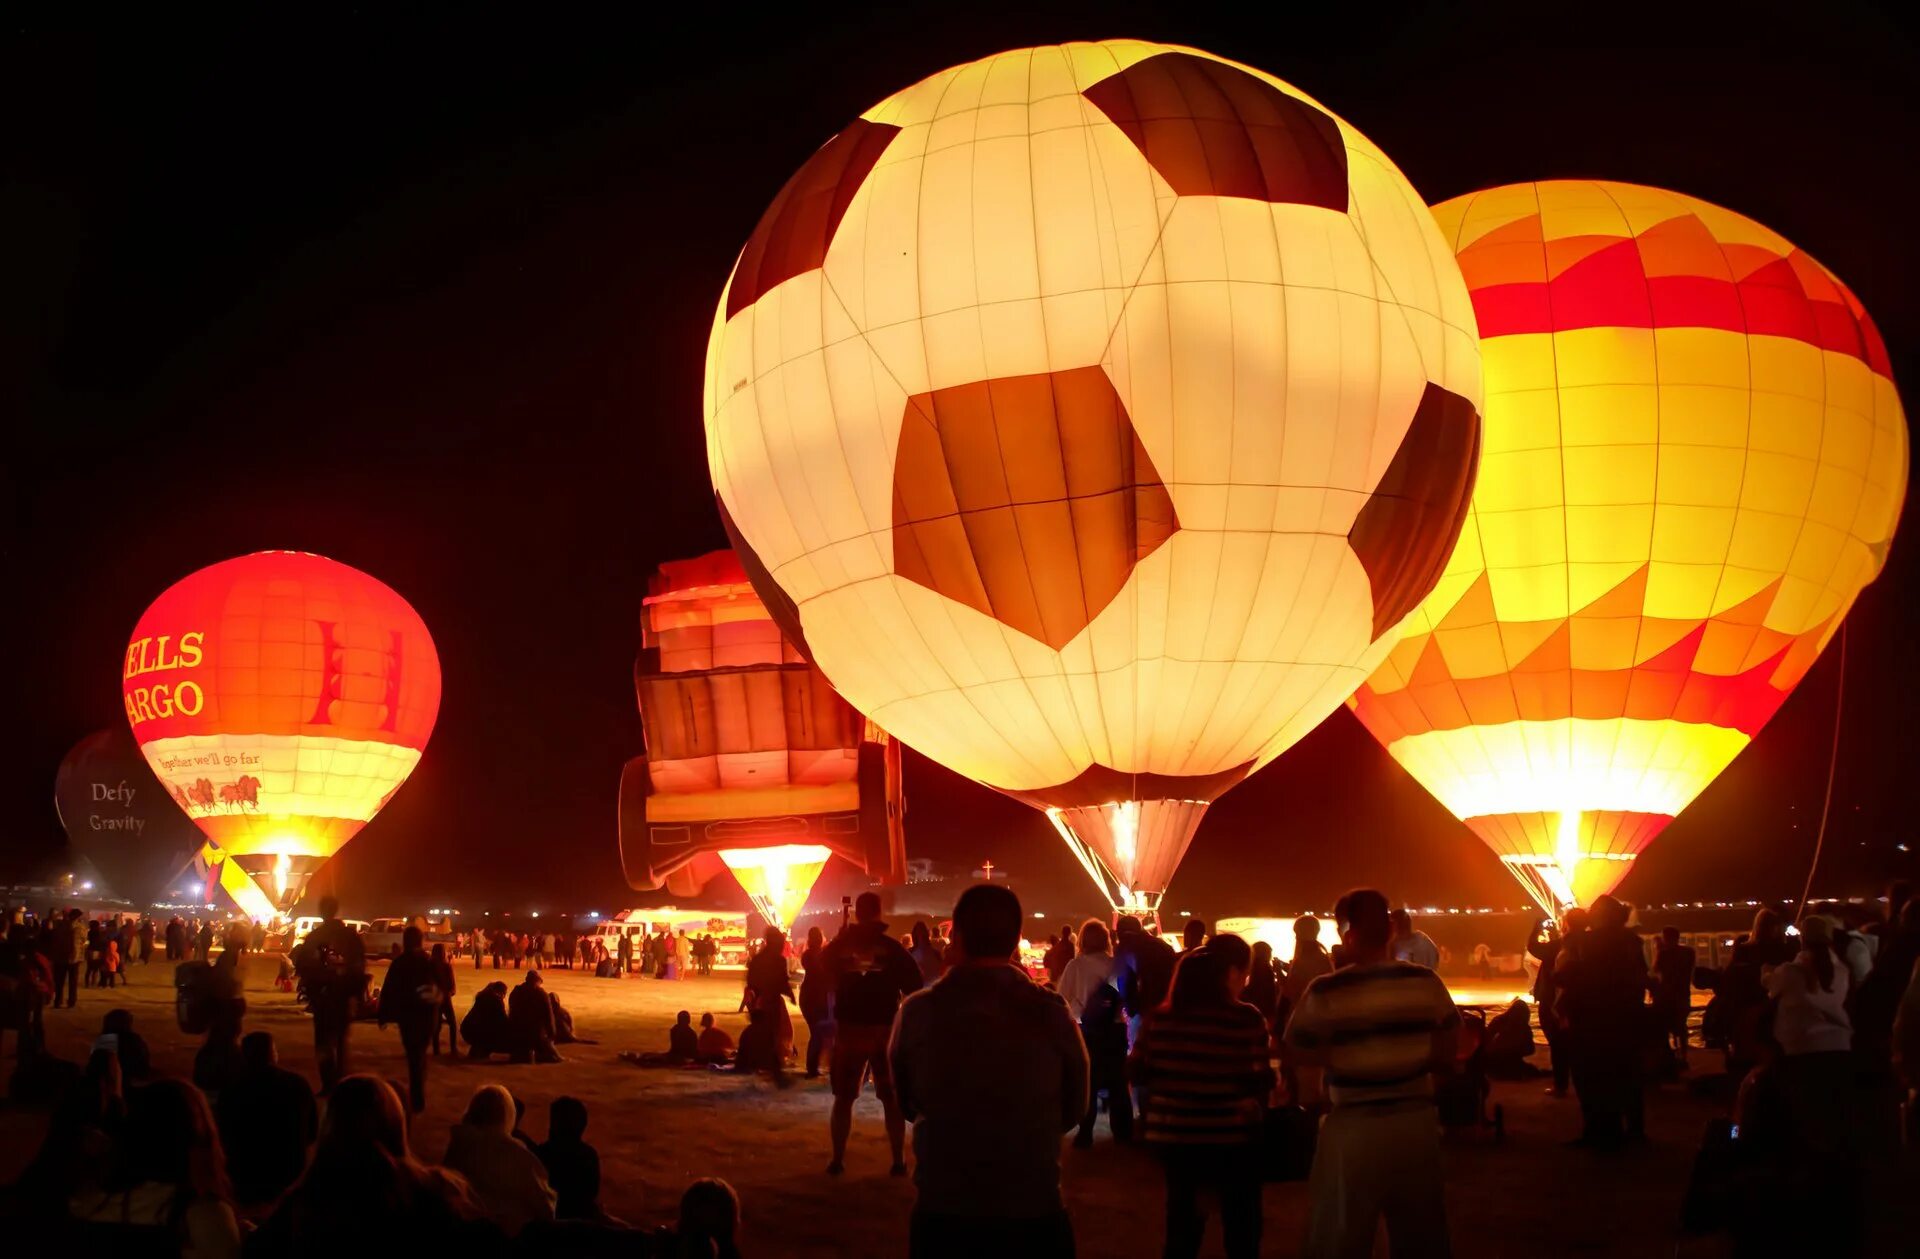 Гонка на воздушных шарах. The great Reno Balloon Race Невада. Фестиваль воздушных шаров. Фестиваль воздушных шаров в Канаде. Воздушный шар Канада.